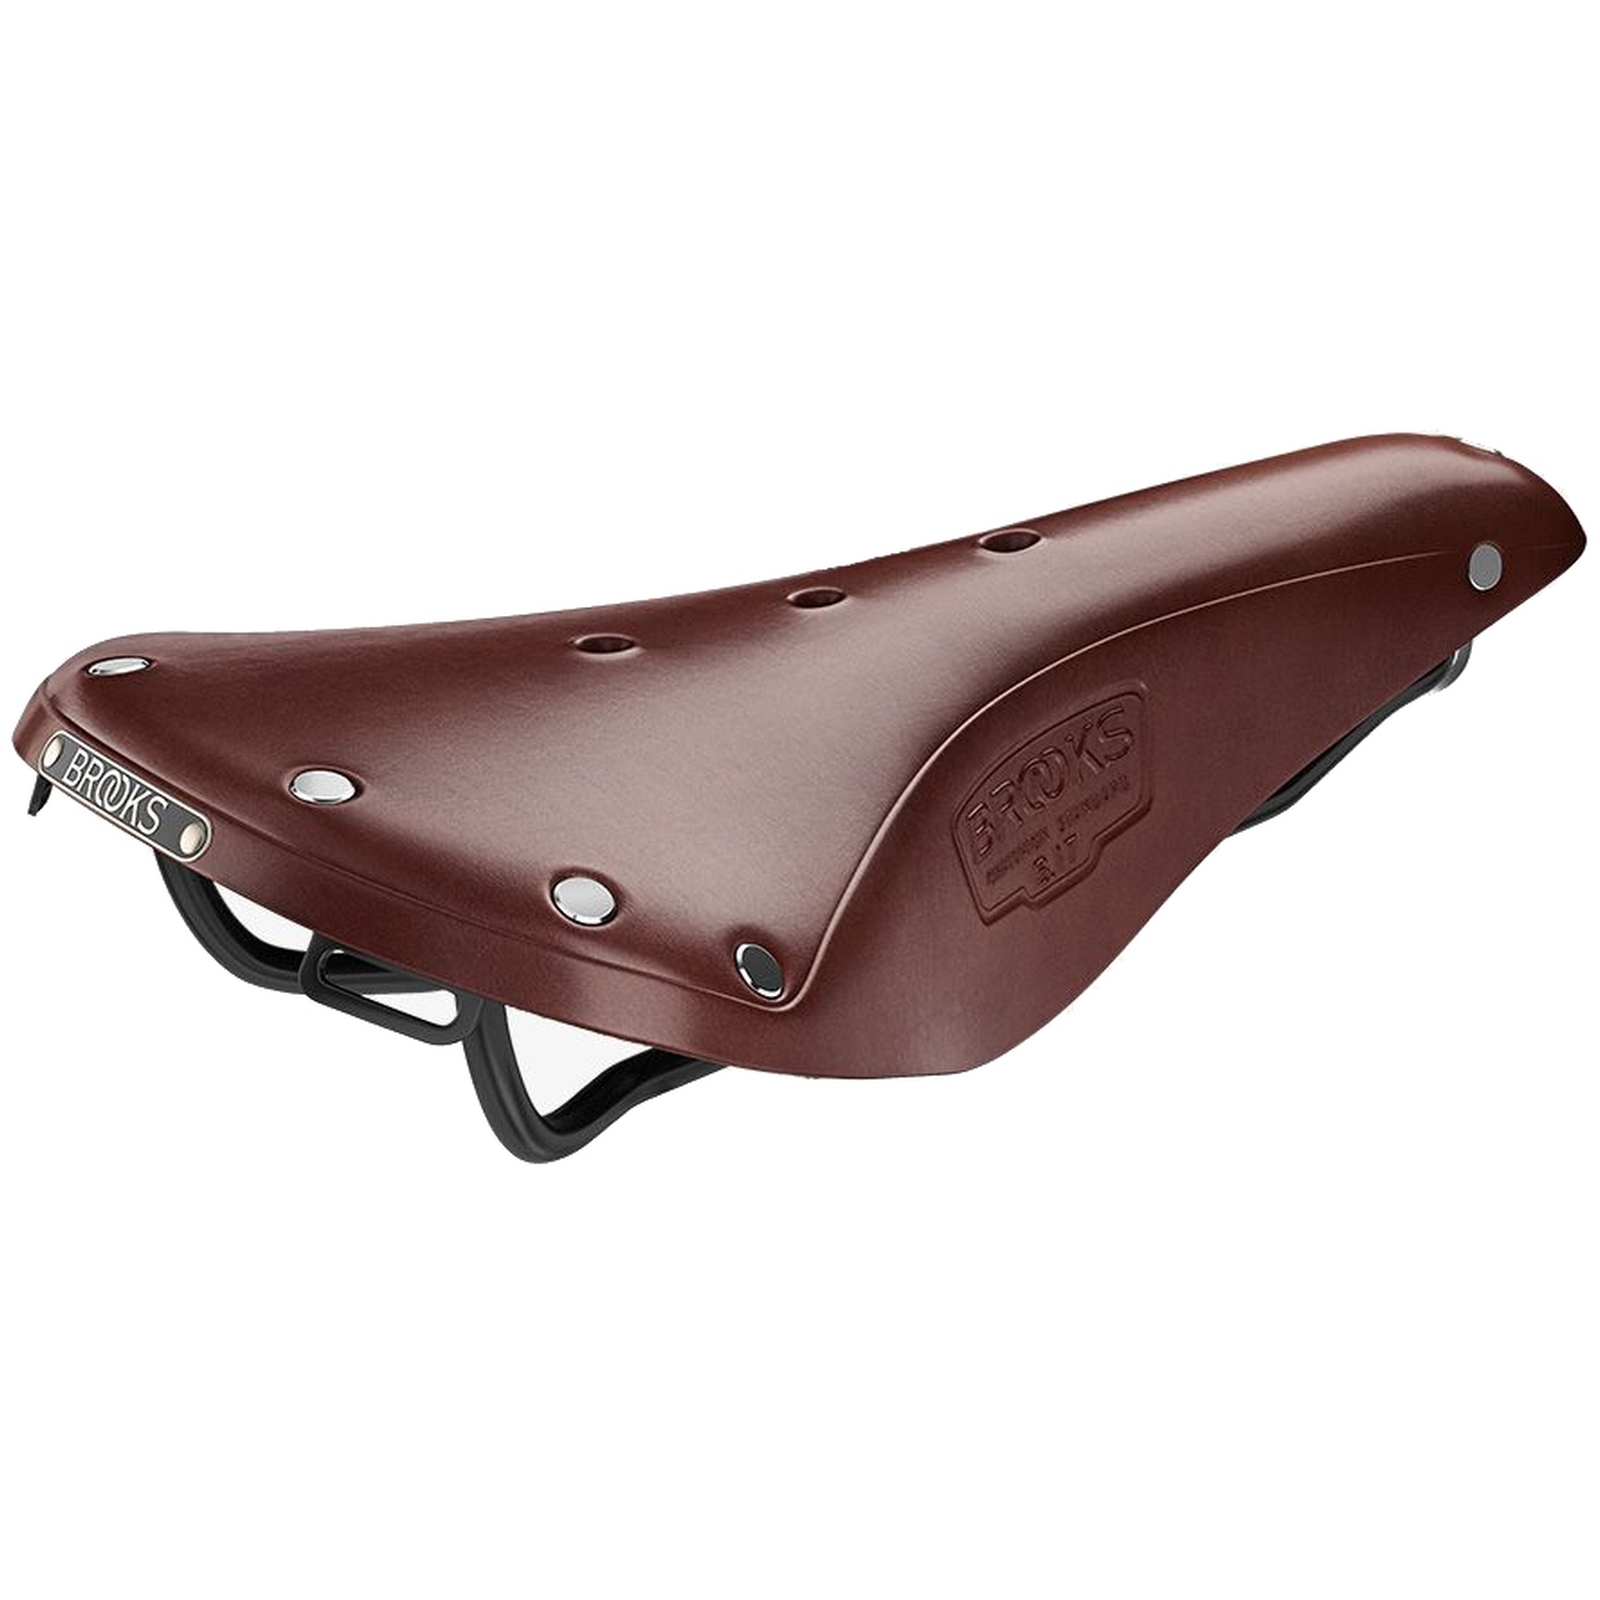 Productfoto van Brooks B17 Bend Leather Saddle - brown